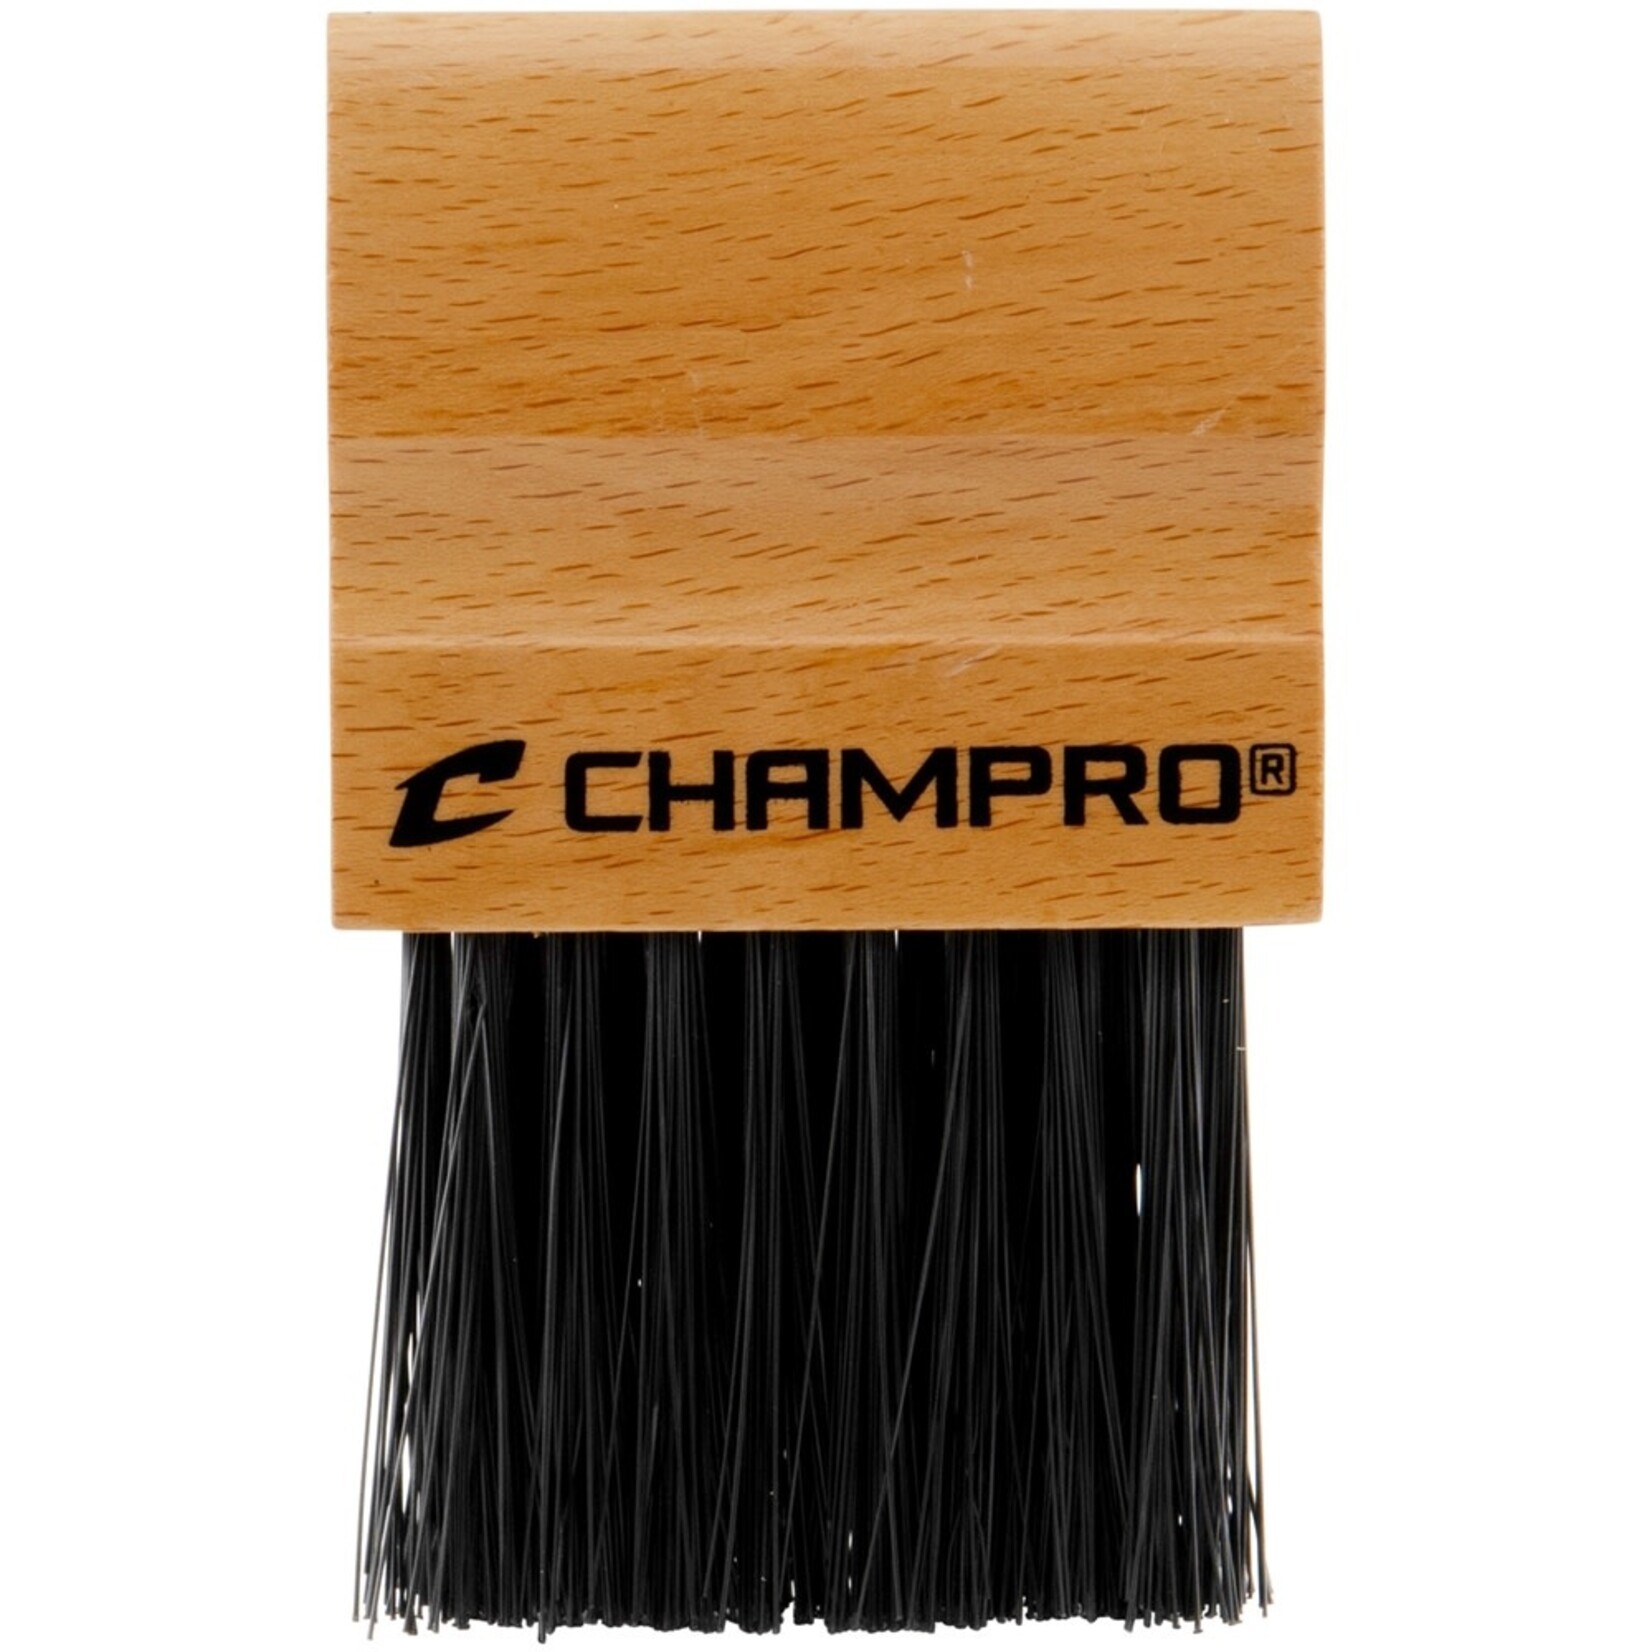 Champro Champro Wooden Handle Plate Brush